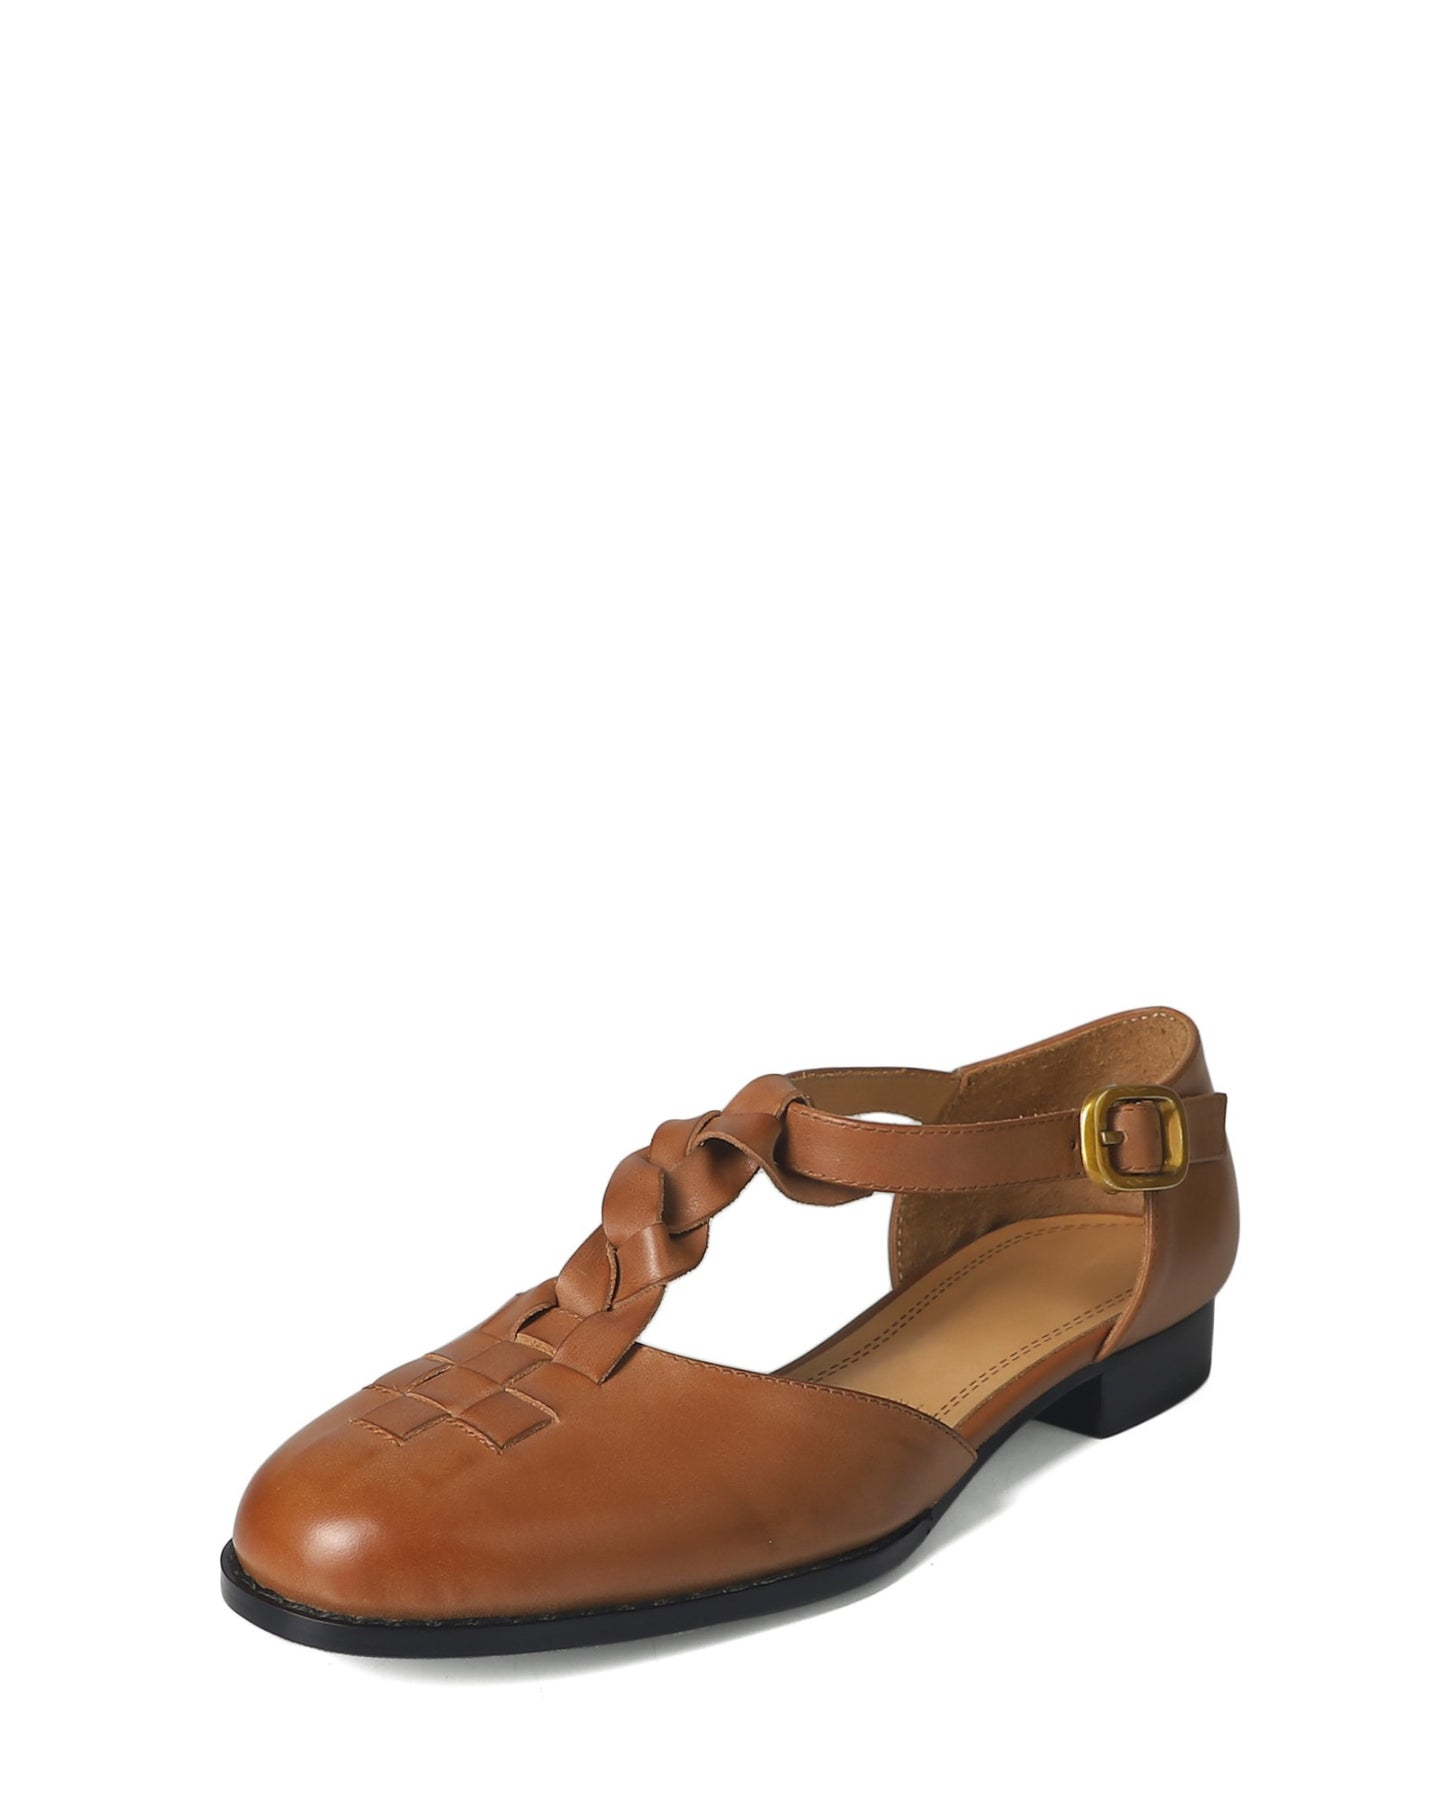 451 - Woven Sandals